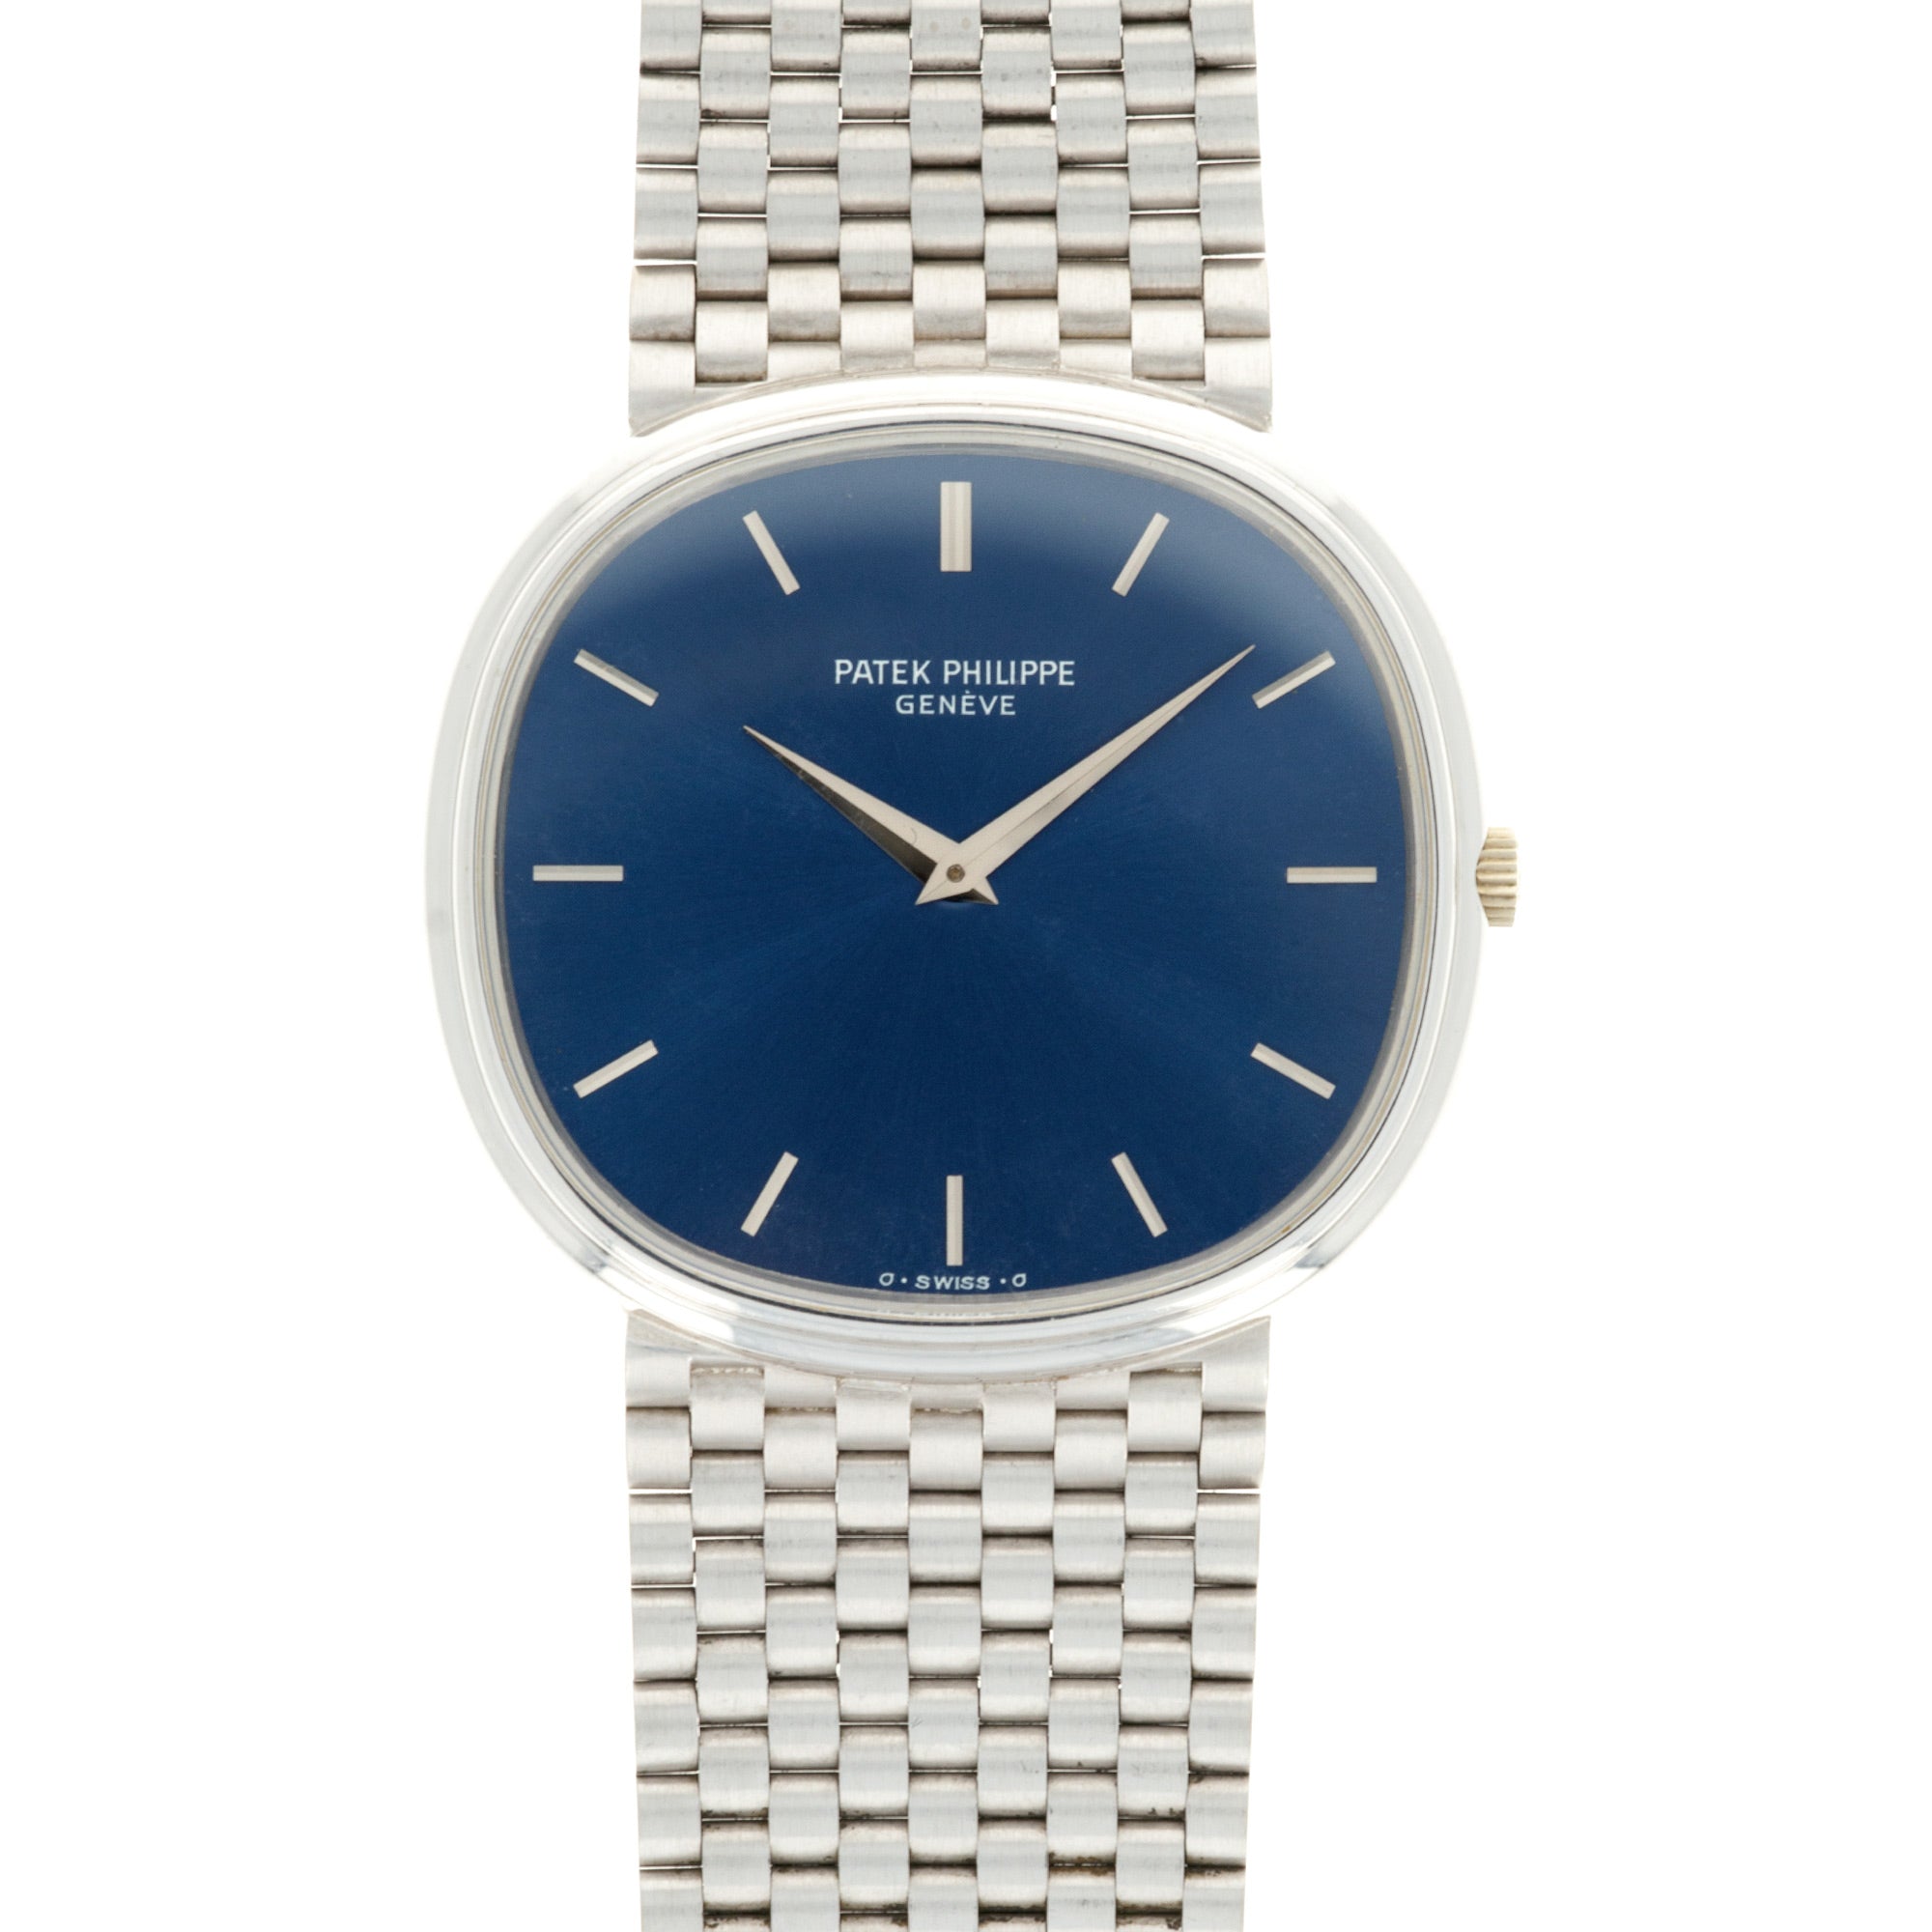 Patek Philippe - Patek Philippe White Gold Automatic Watch Ref. 3844 - The Keystone Watches